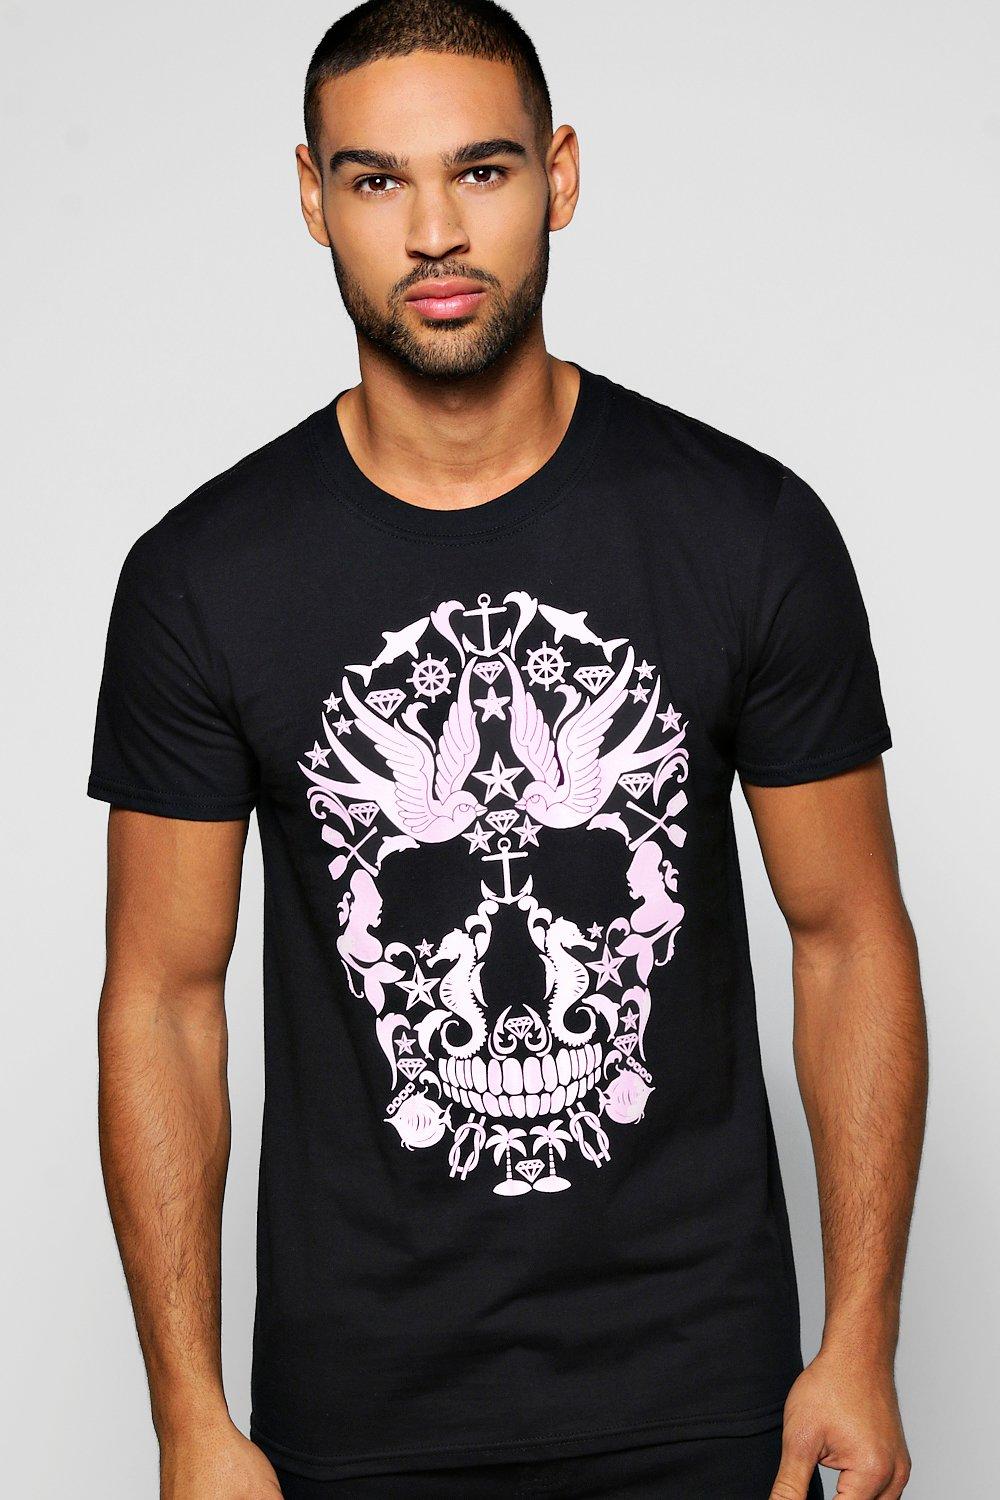 Boohoo Mens Skull Print T-Shirt | eBay